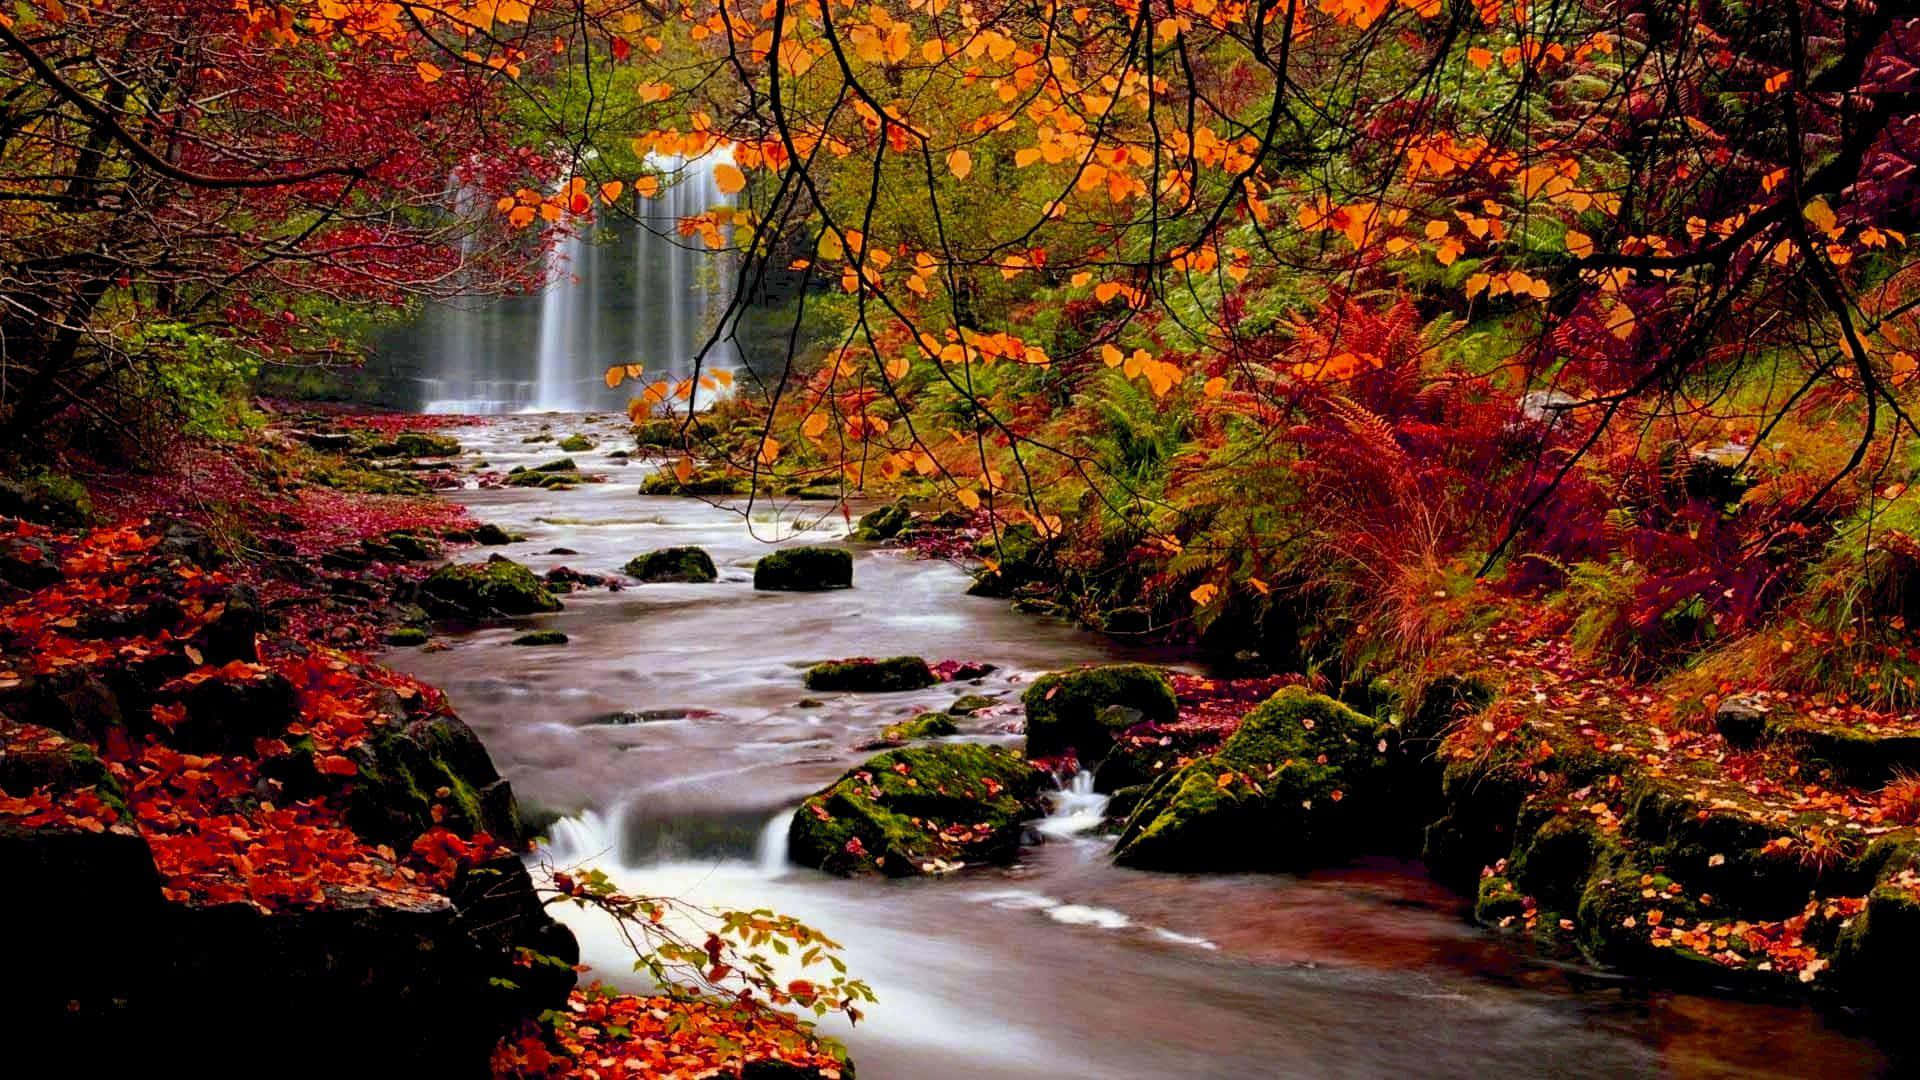 Autumn Desktop - Enjoy the beauty of nature this fall! Wallpaper